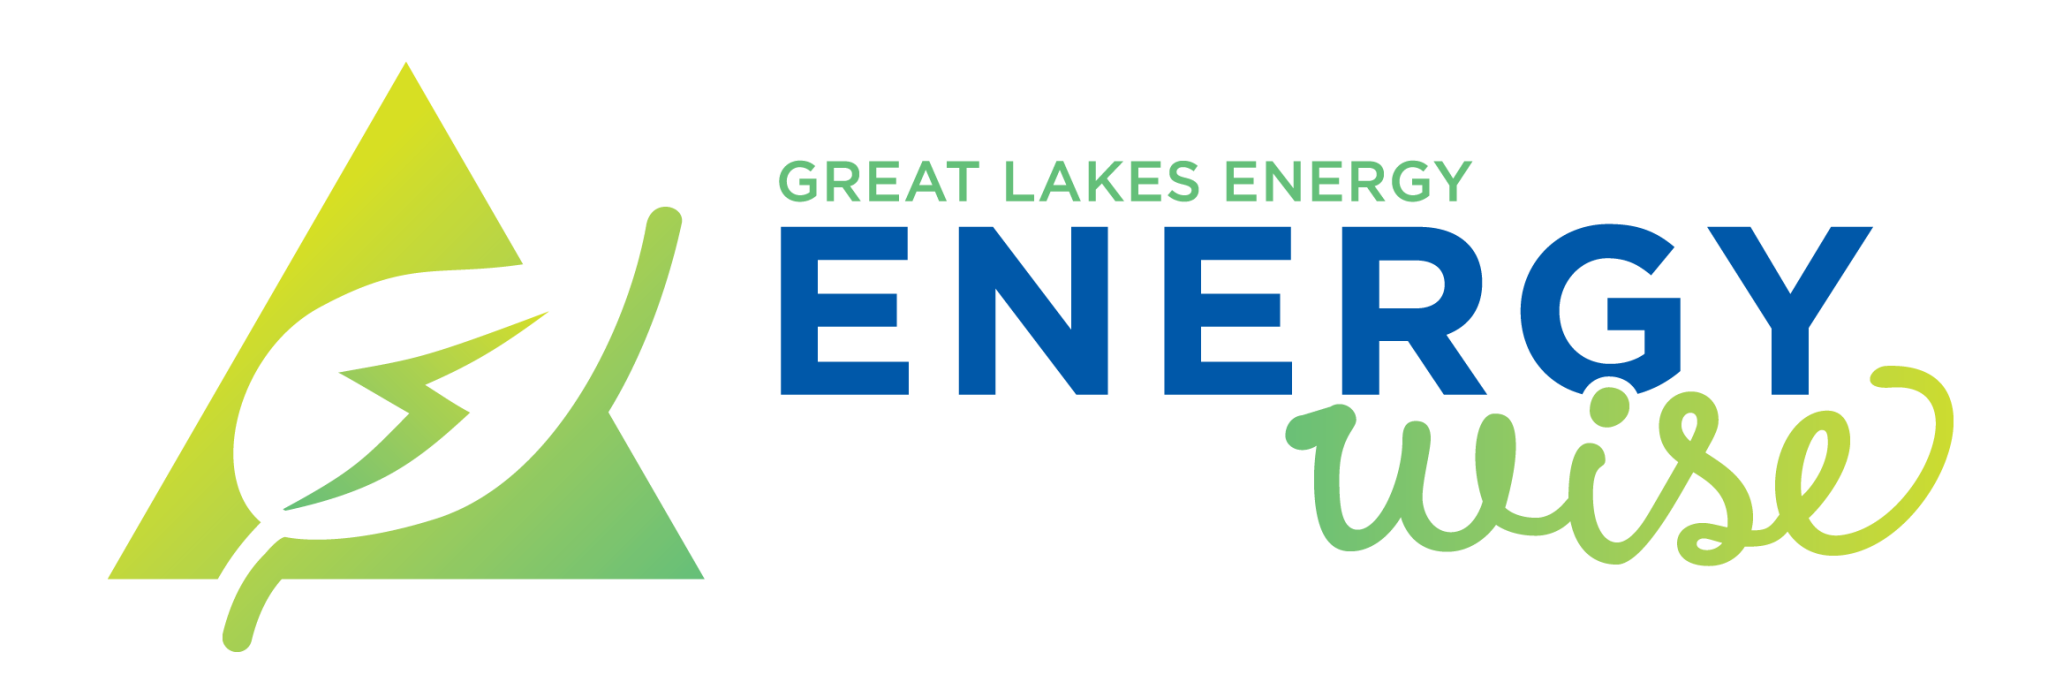 energy-wise-great-lakes-energy